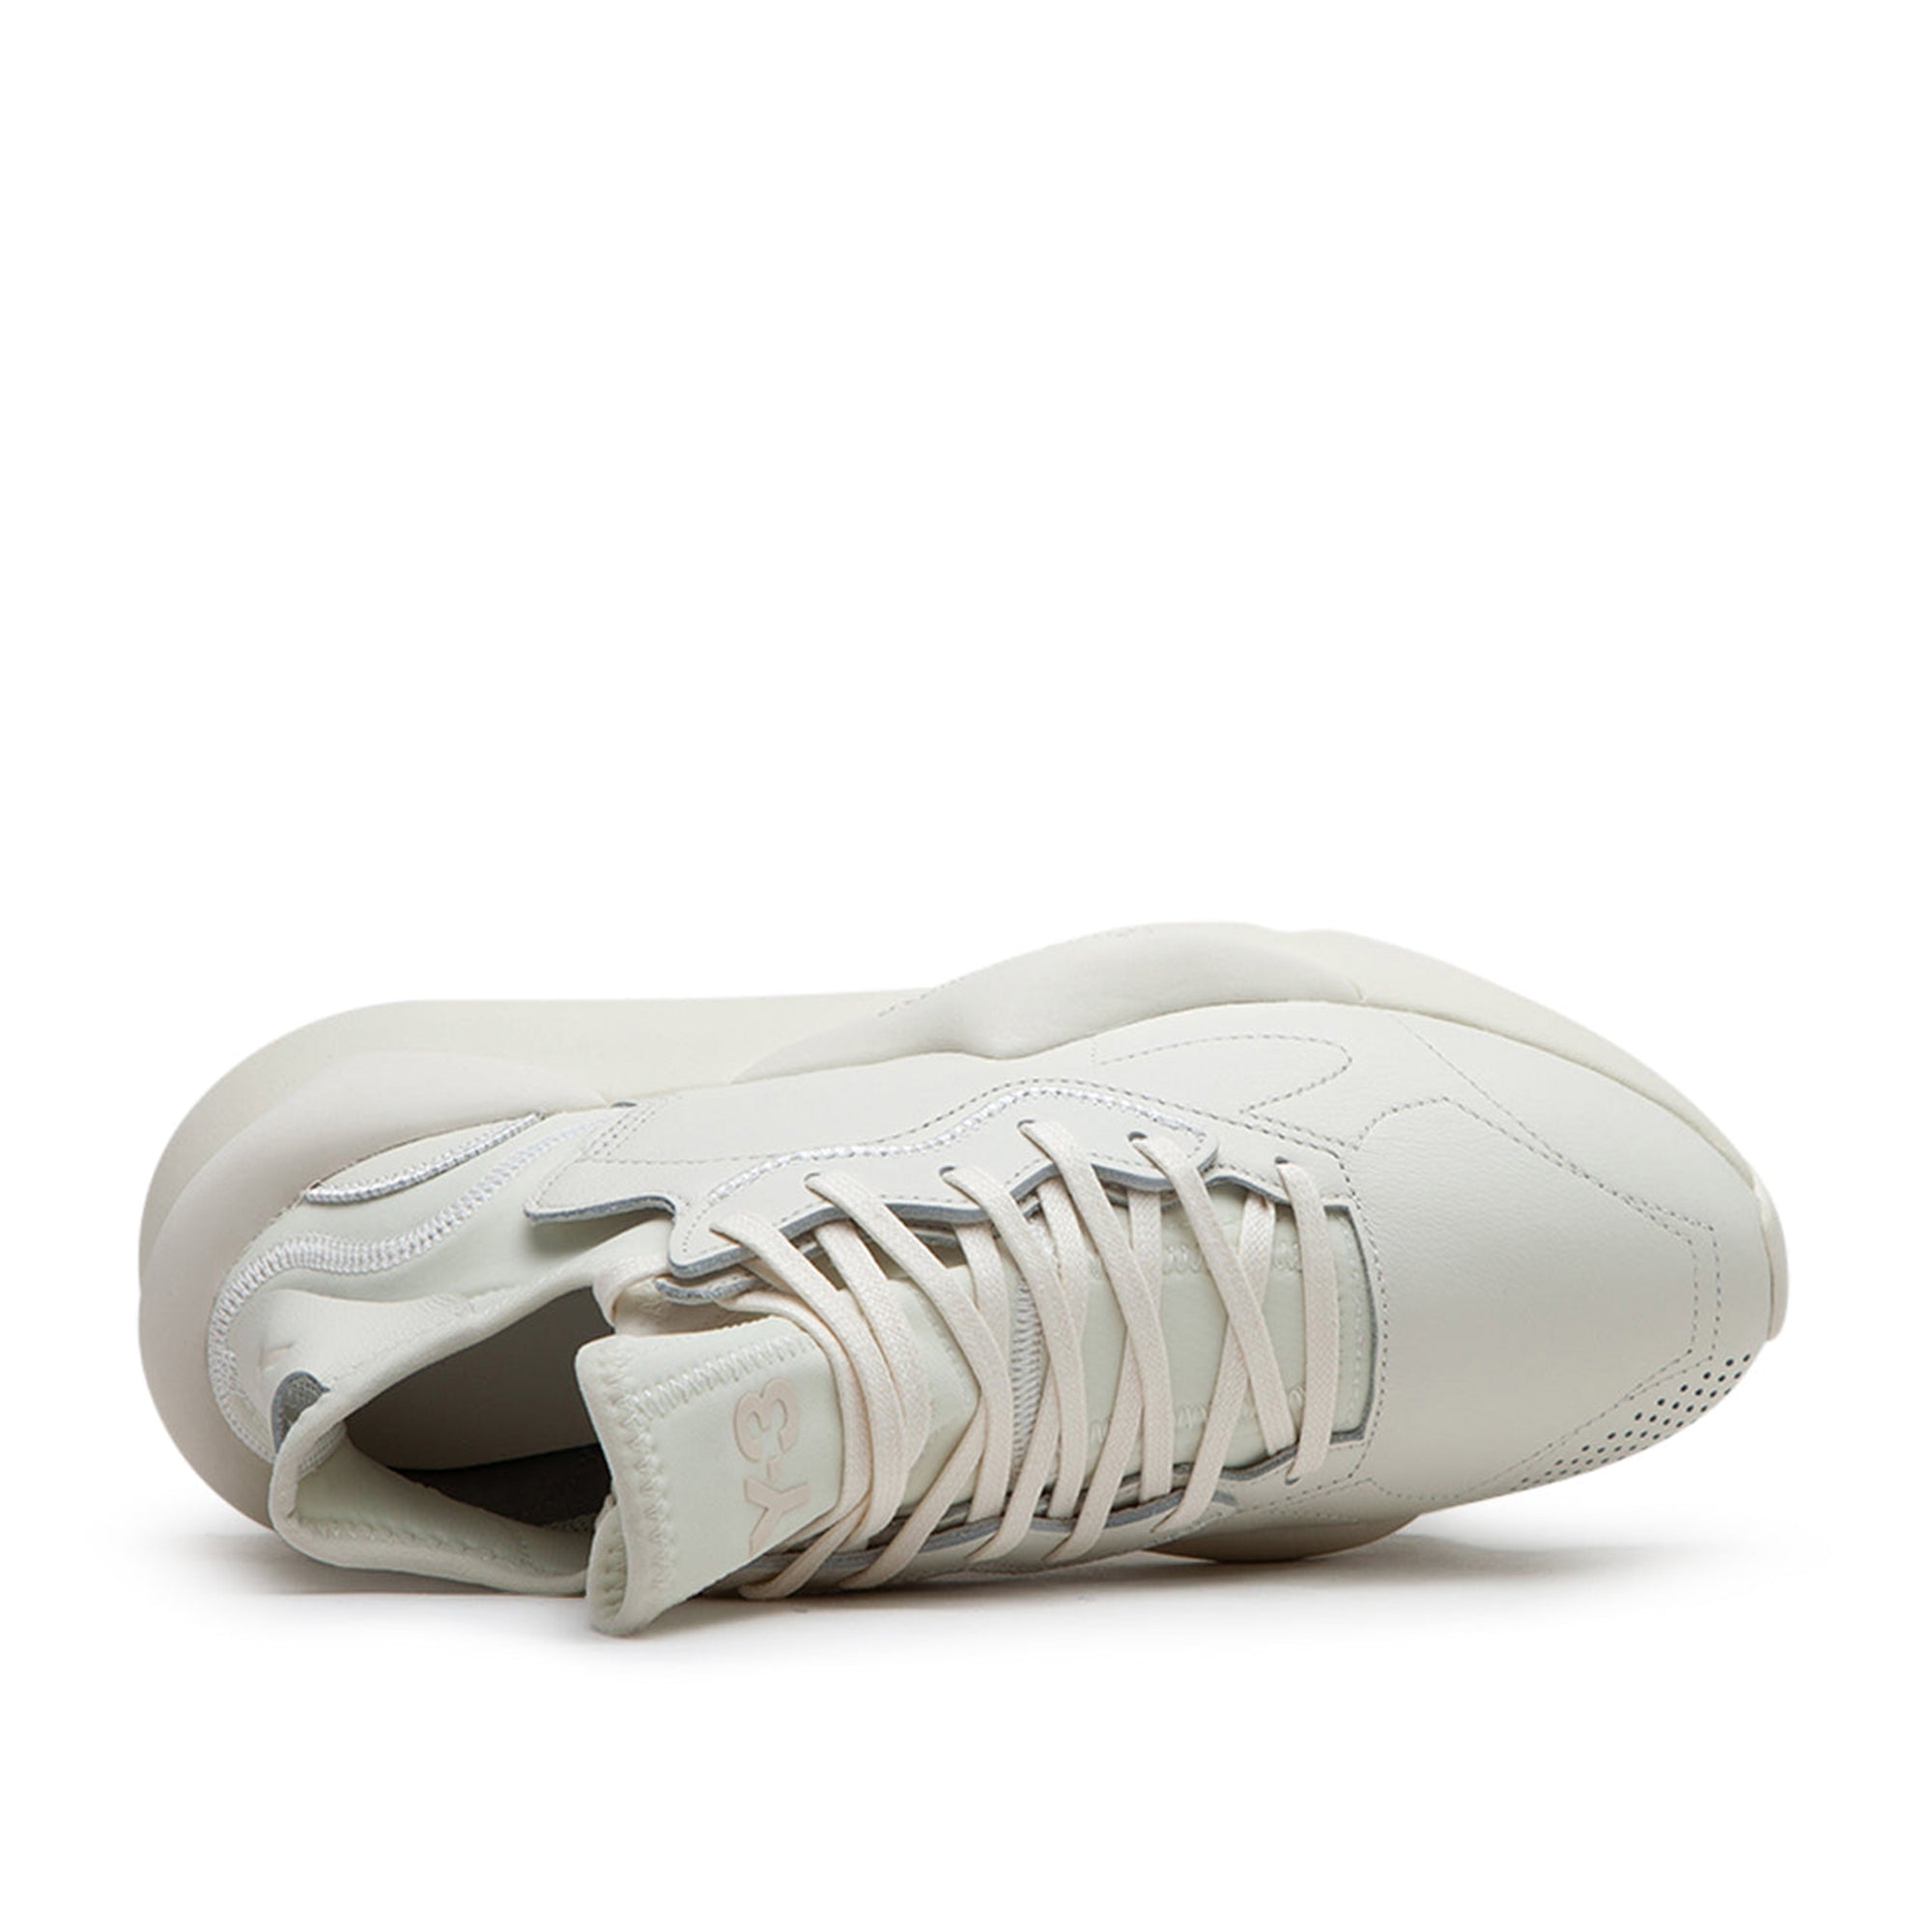 Y-3 Mens Kaiwa Sneakers White UK 8